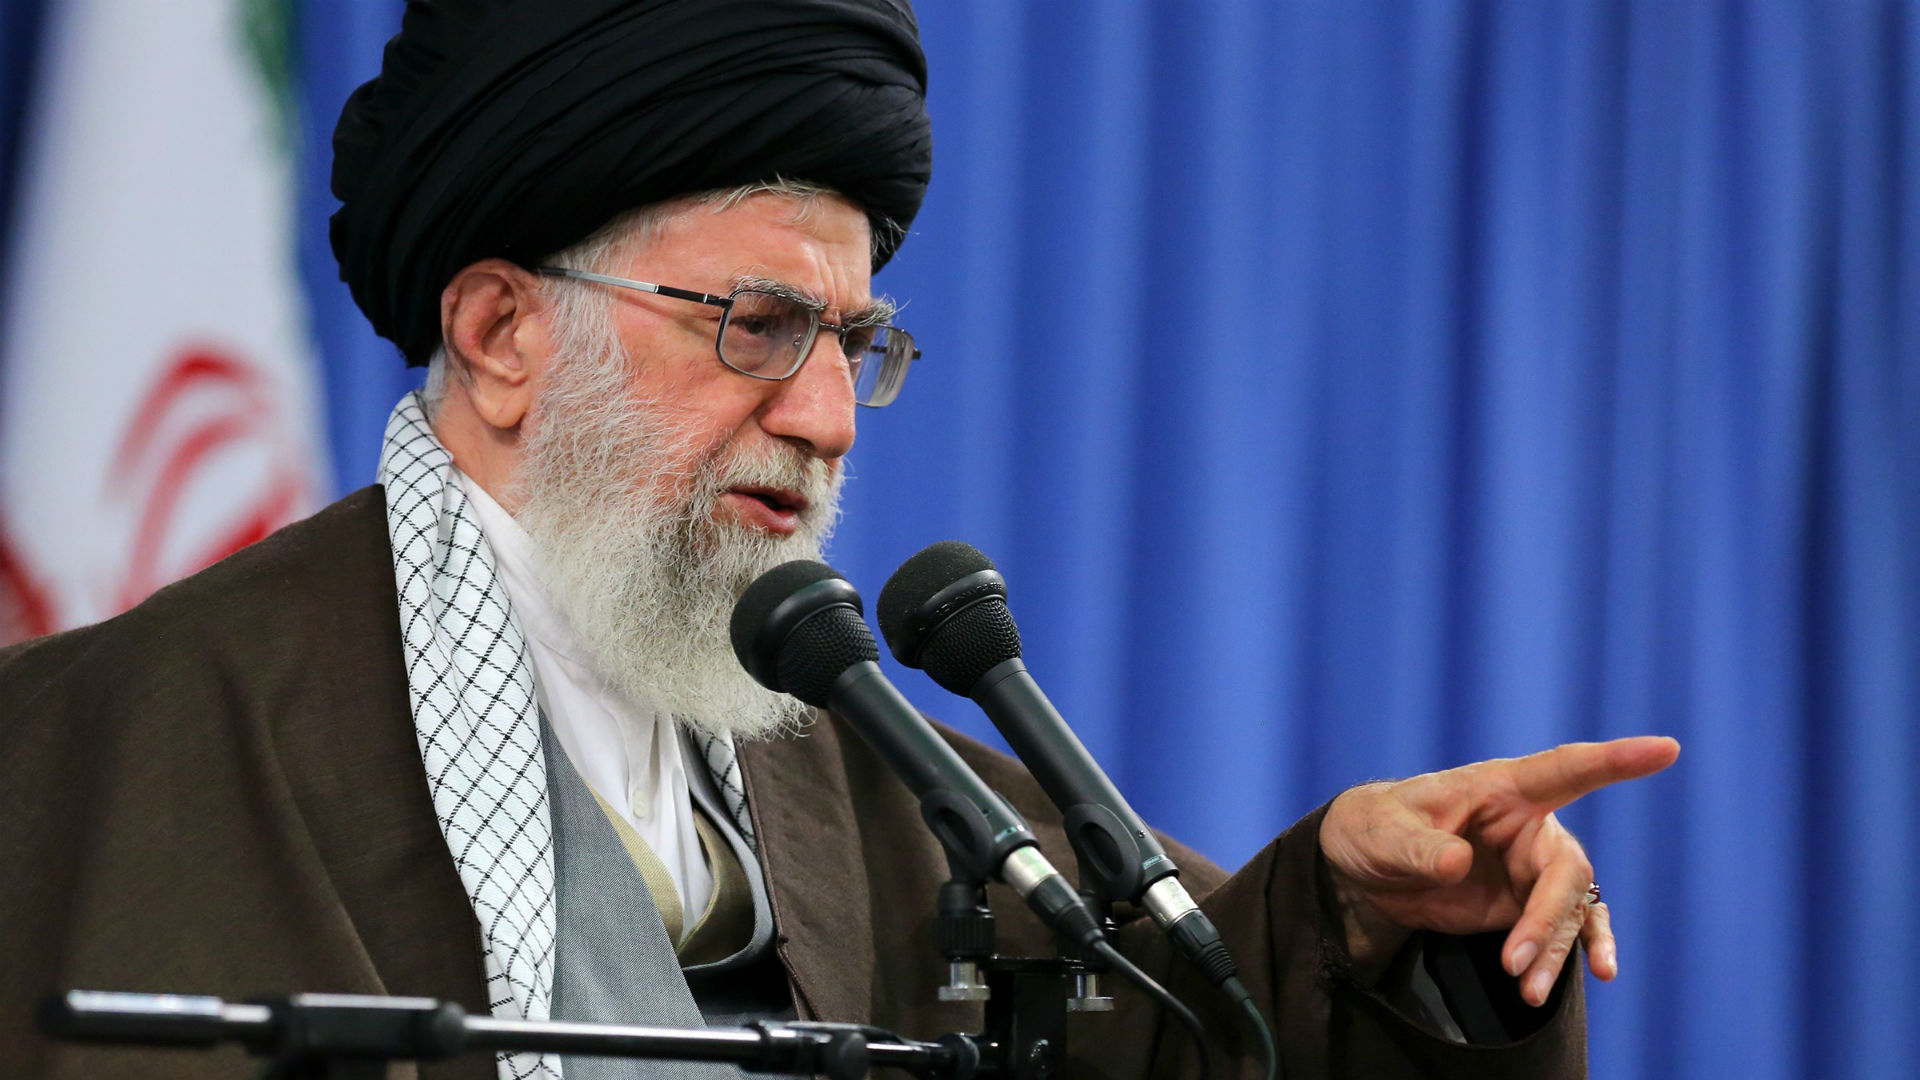 Khamenei says 'missiles, not negotiations' key to Iranian security